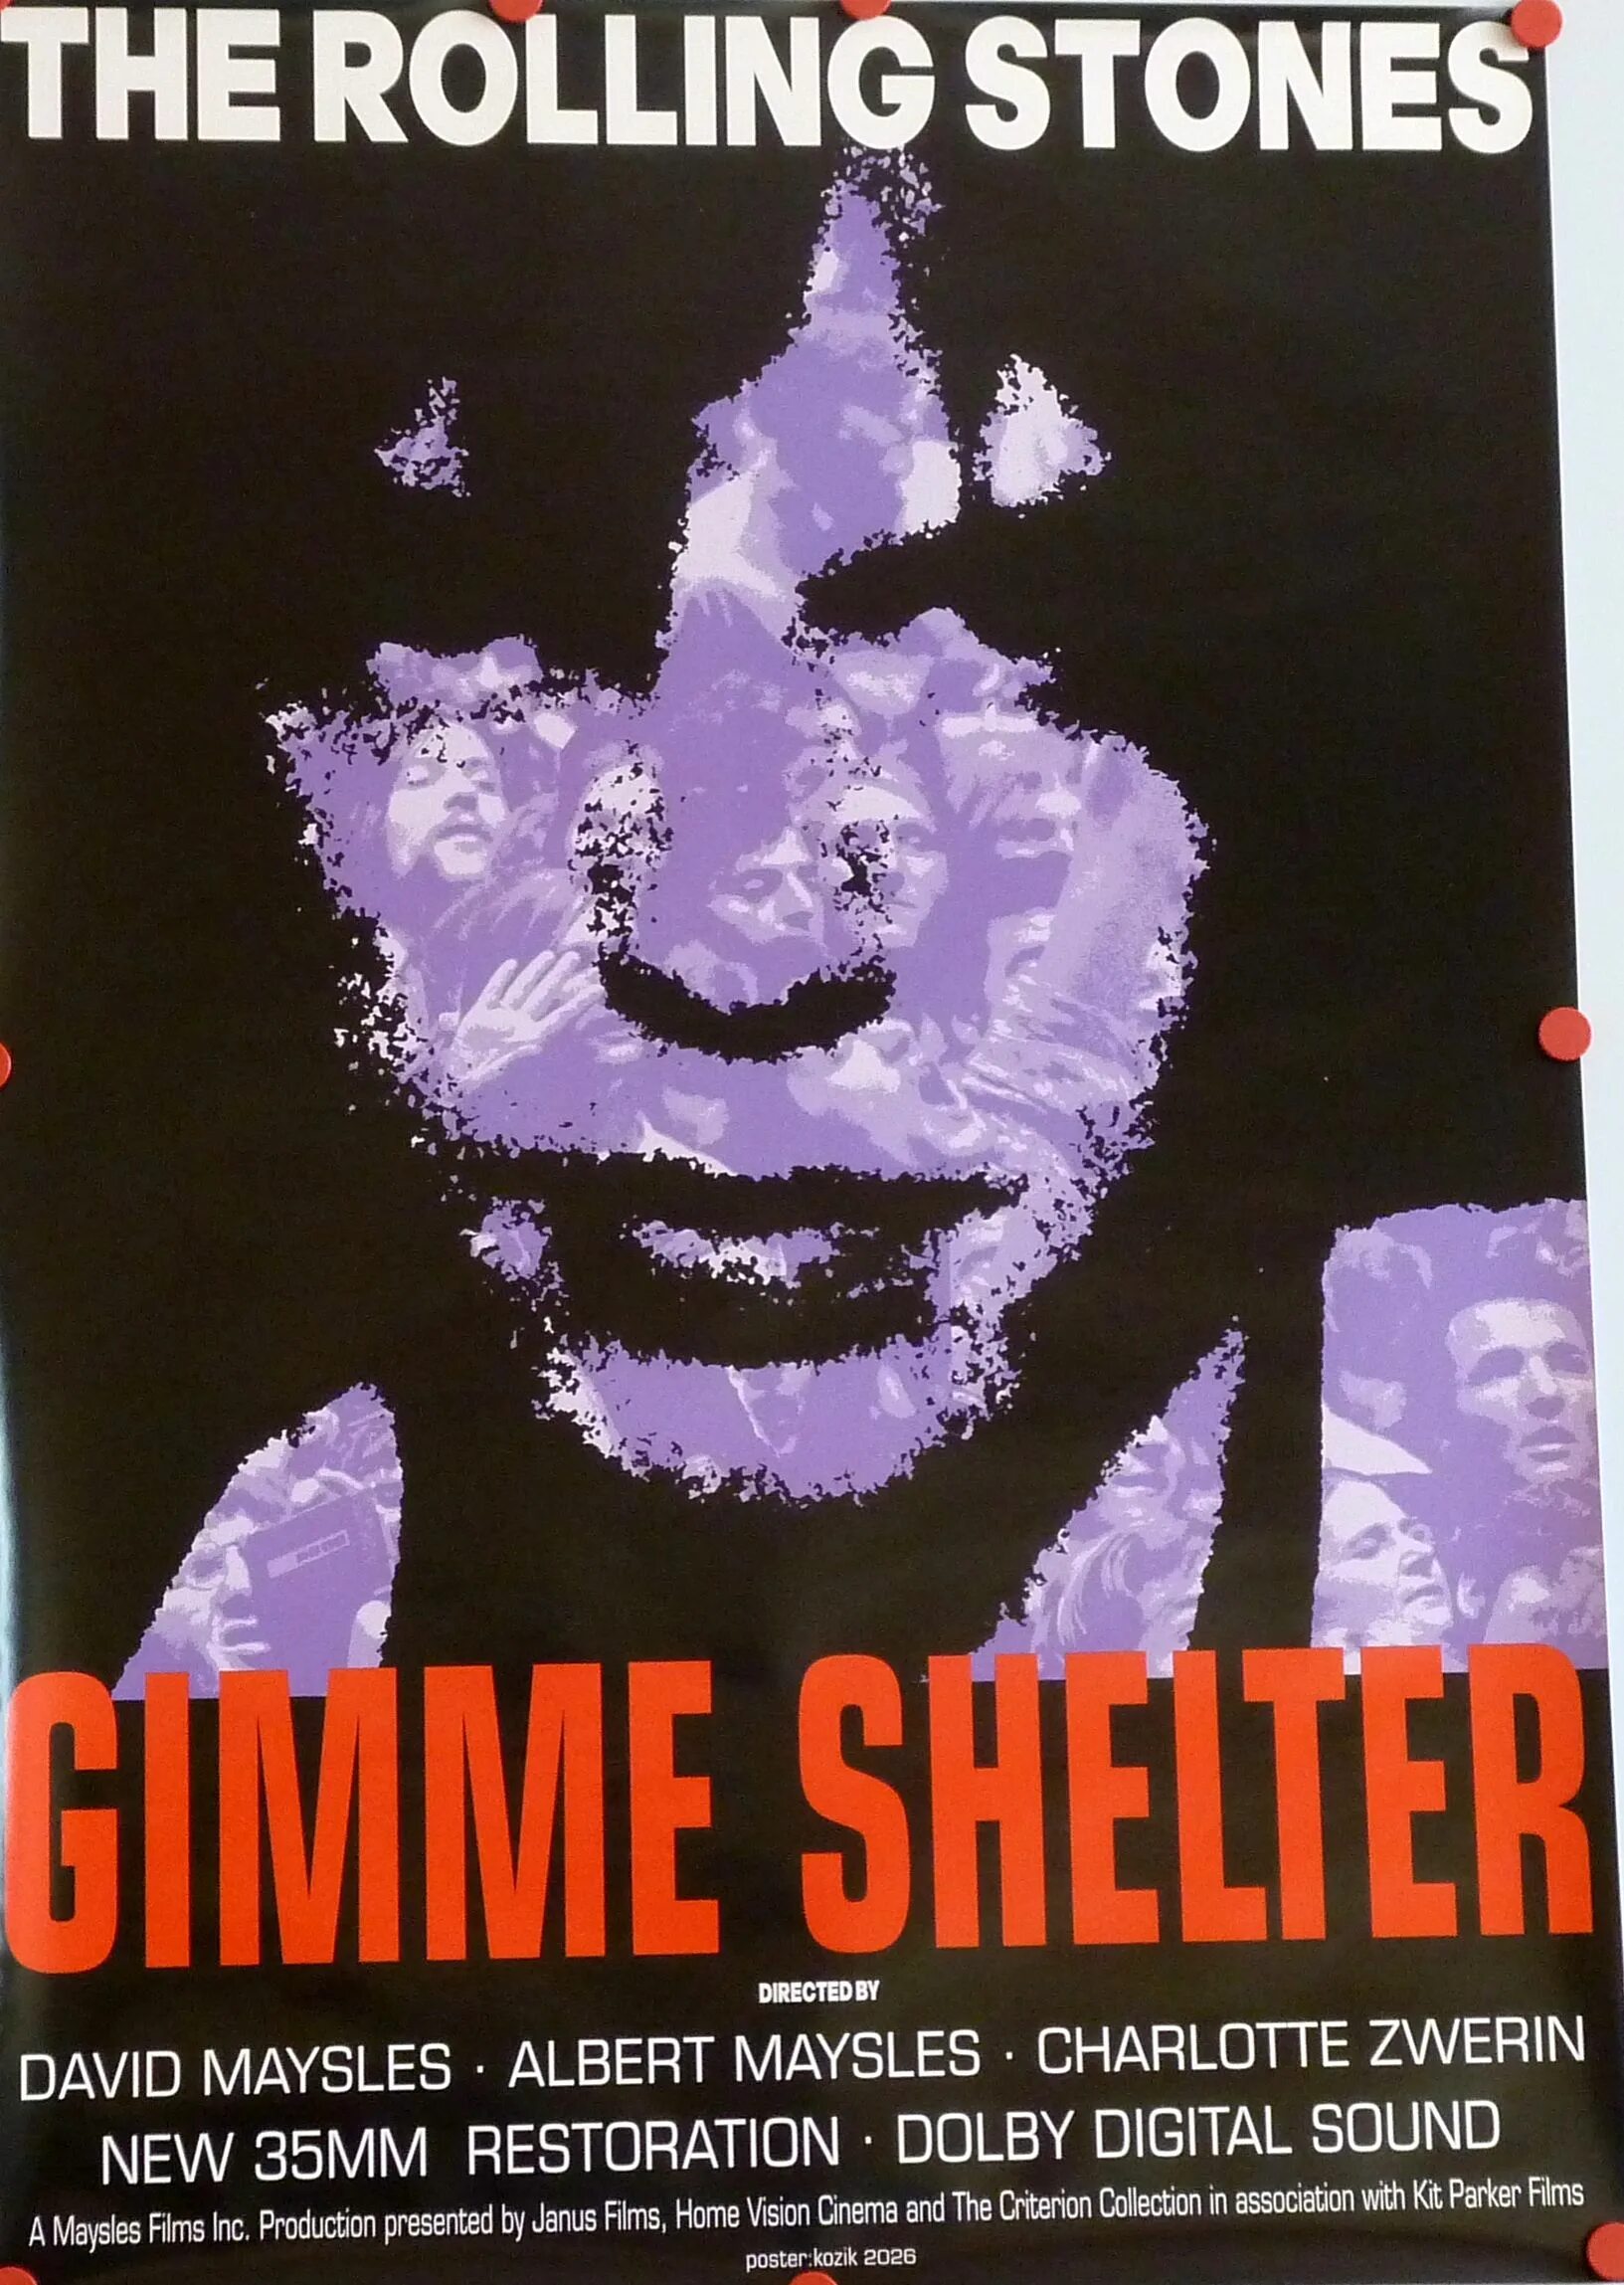 Stones gimme shelter. Gimme Shelter. Rolling Stones "Gimme Shelter". Metallica плакат.